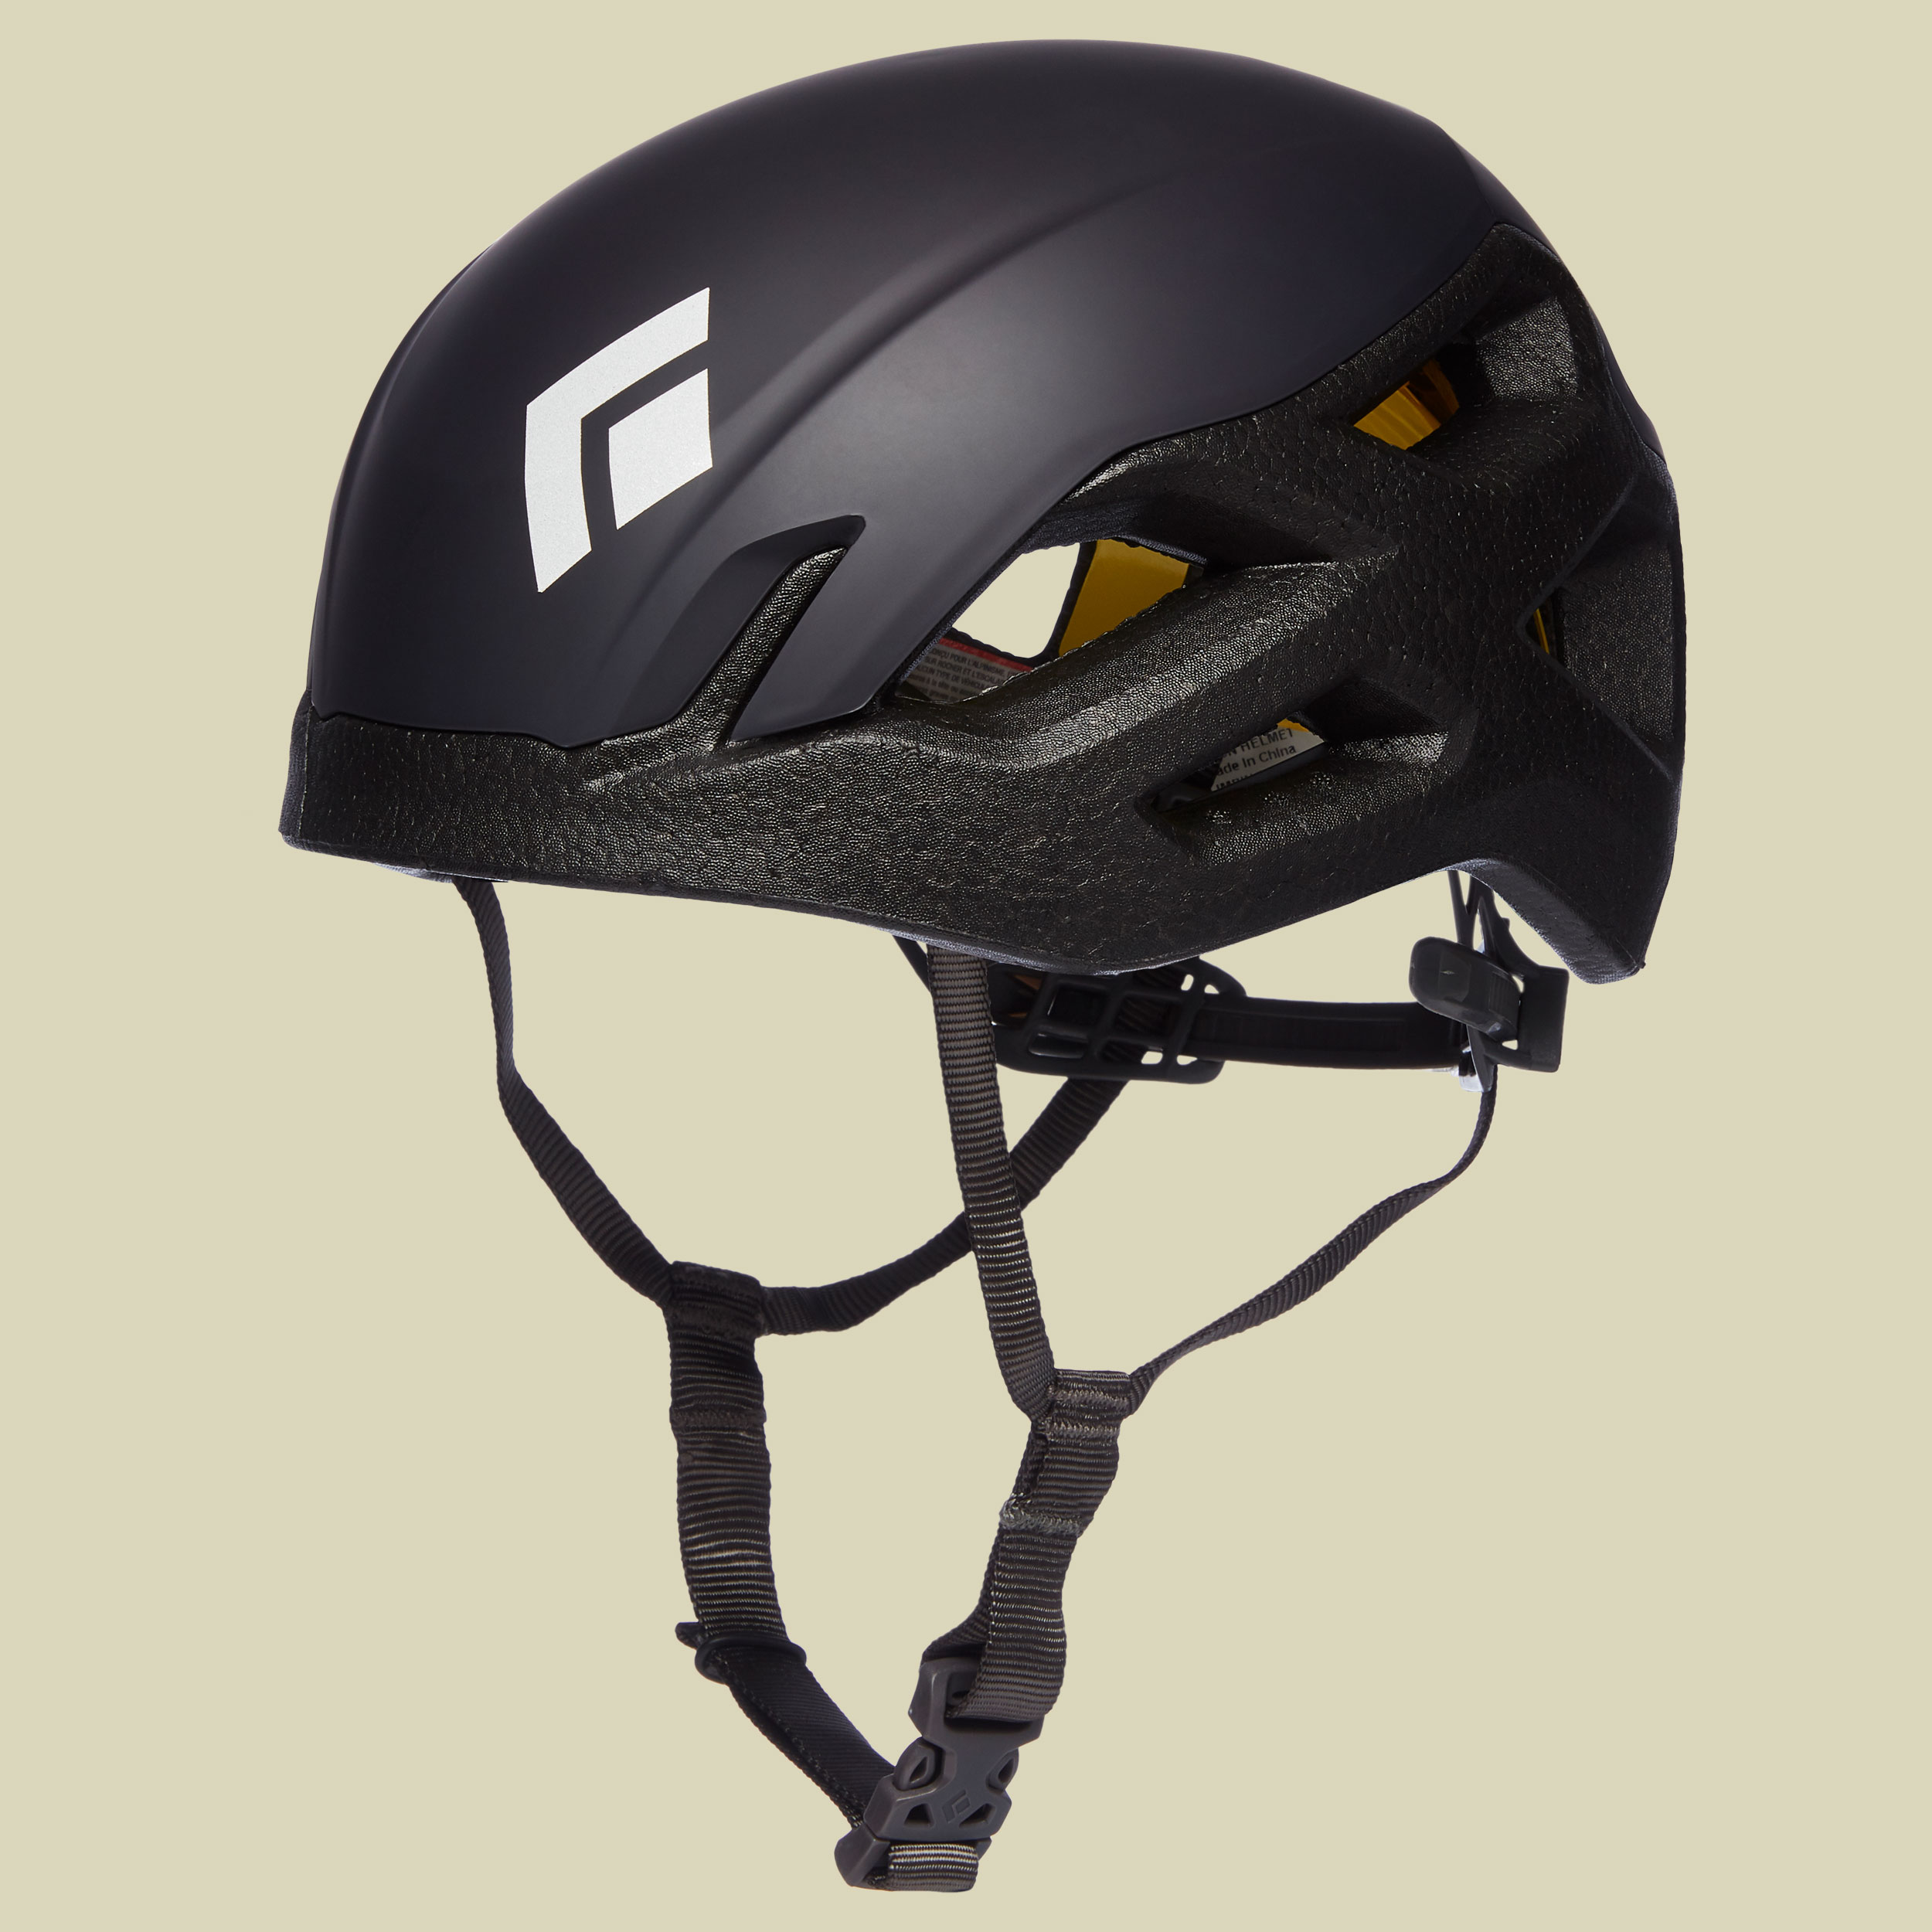 Vision Helmet Mips Unisex Größe M-L Farbe black